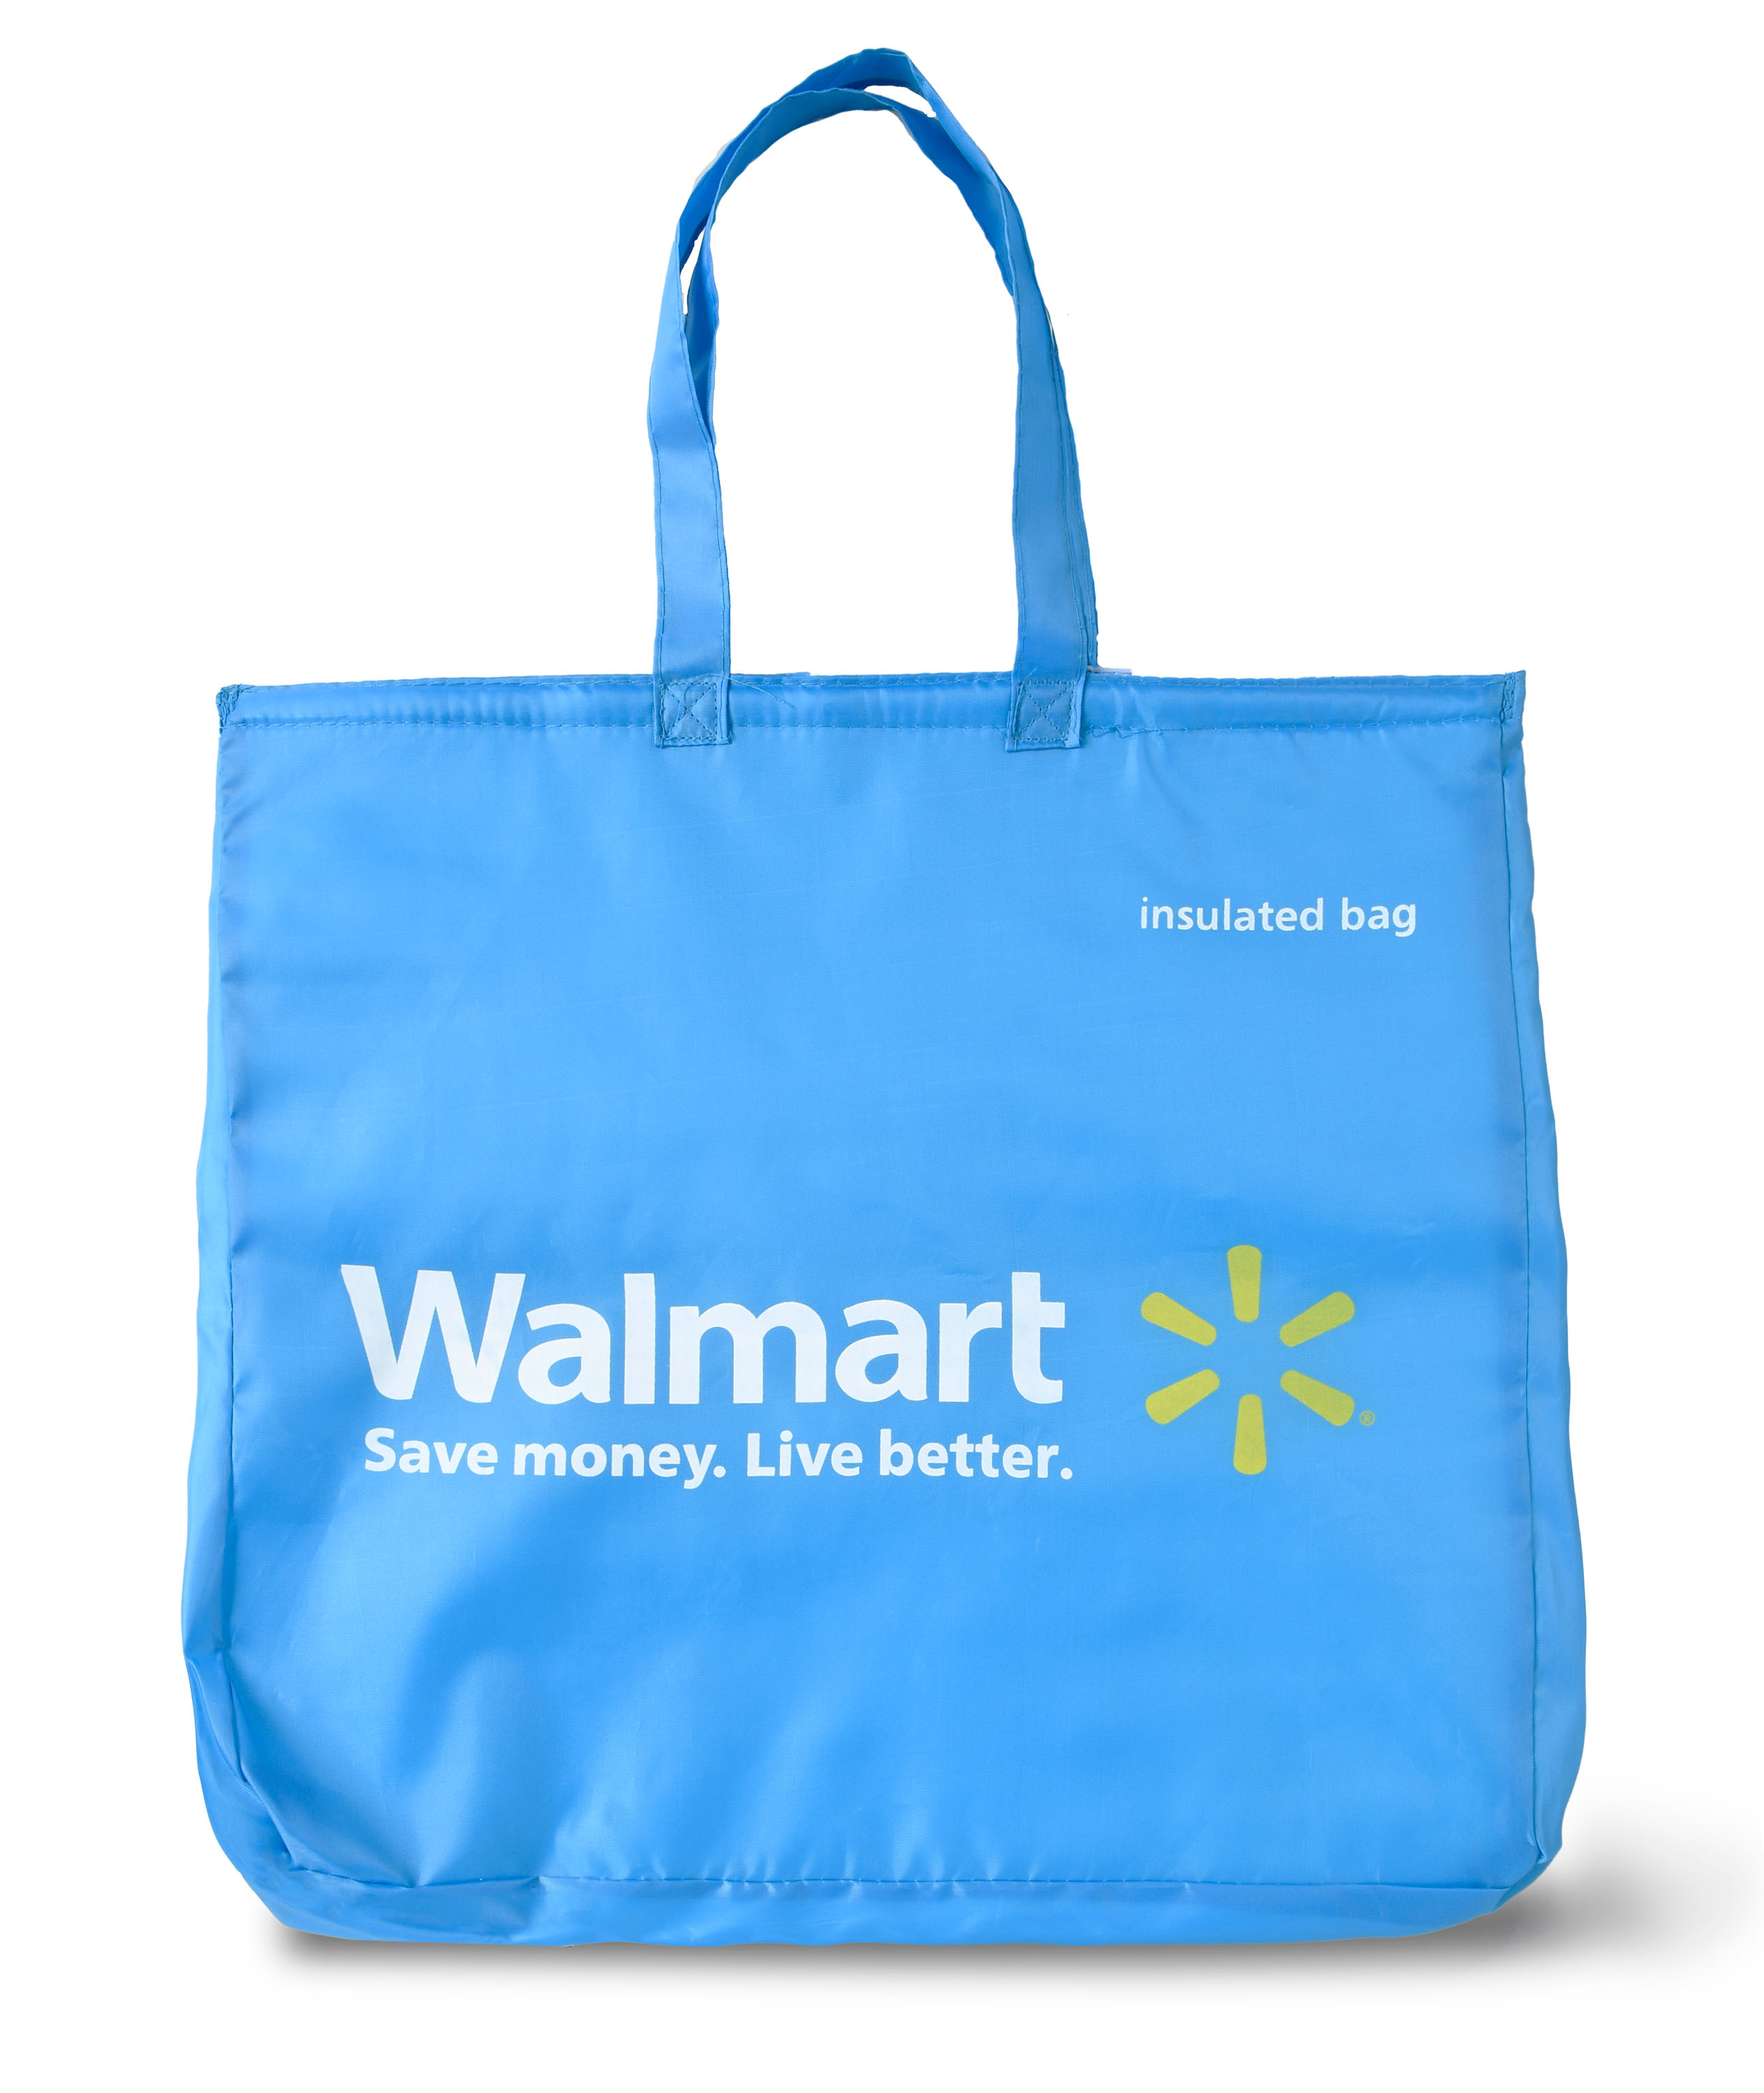 Walmart Reusable Insulated Polyethylene Grocery Bag, Blue - image 1 of 3